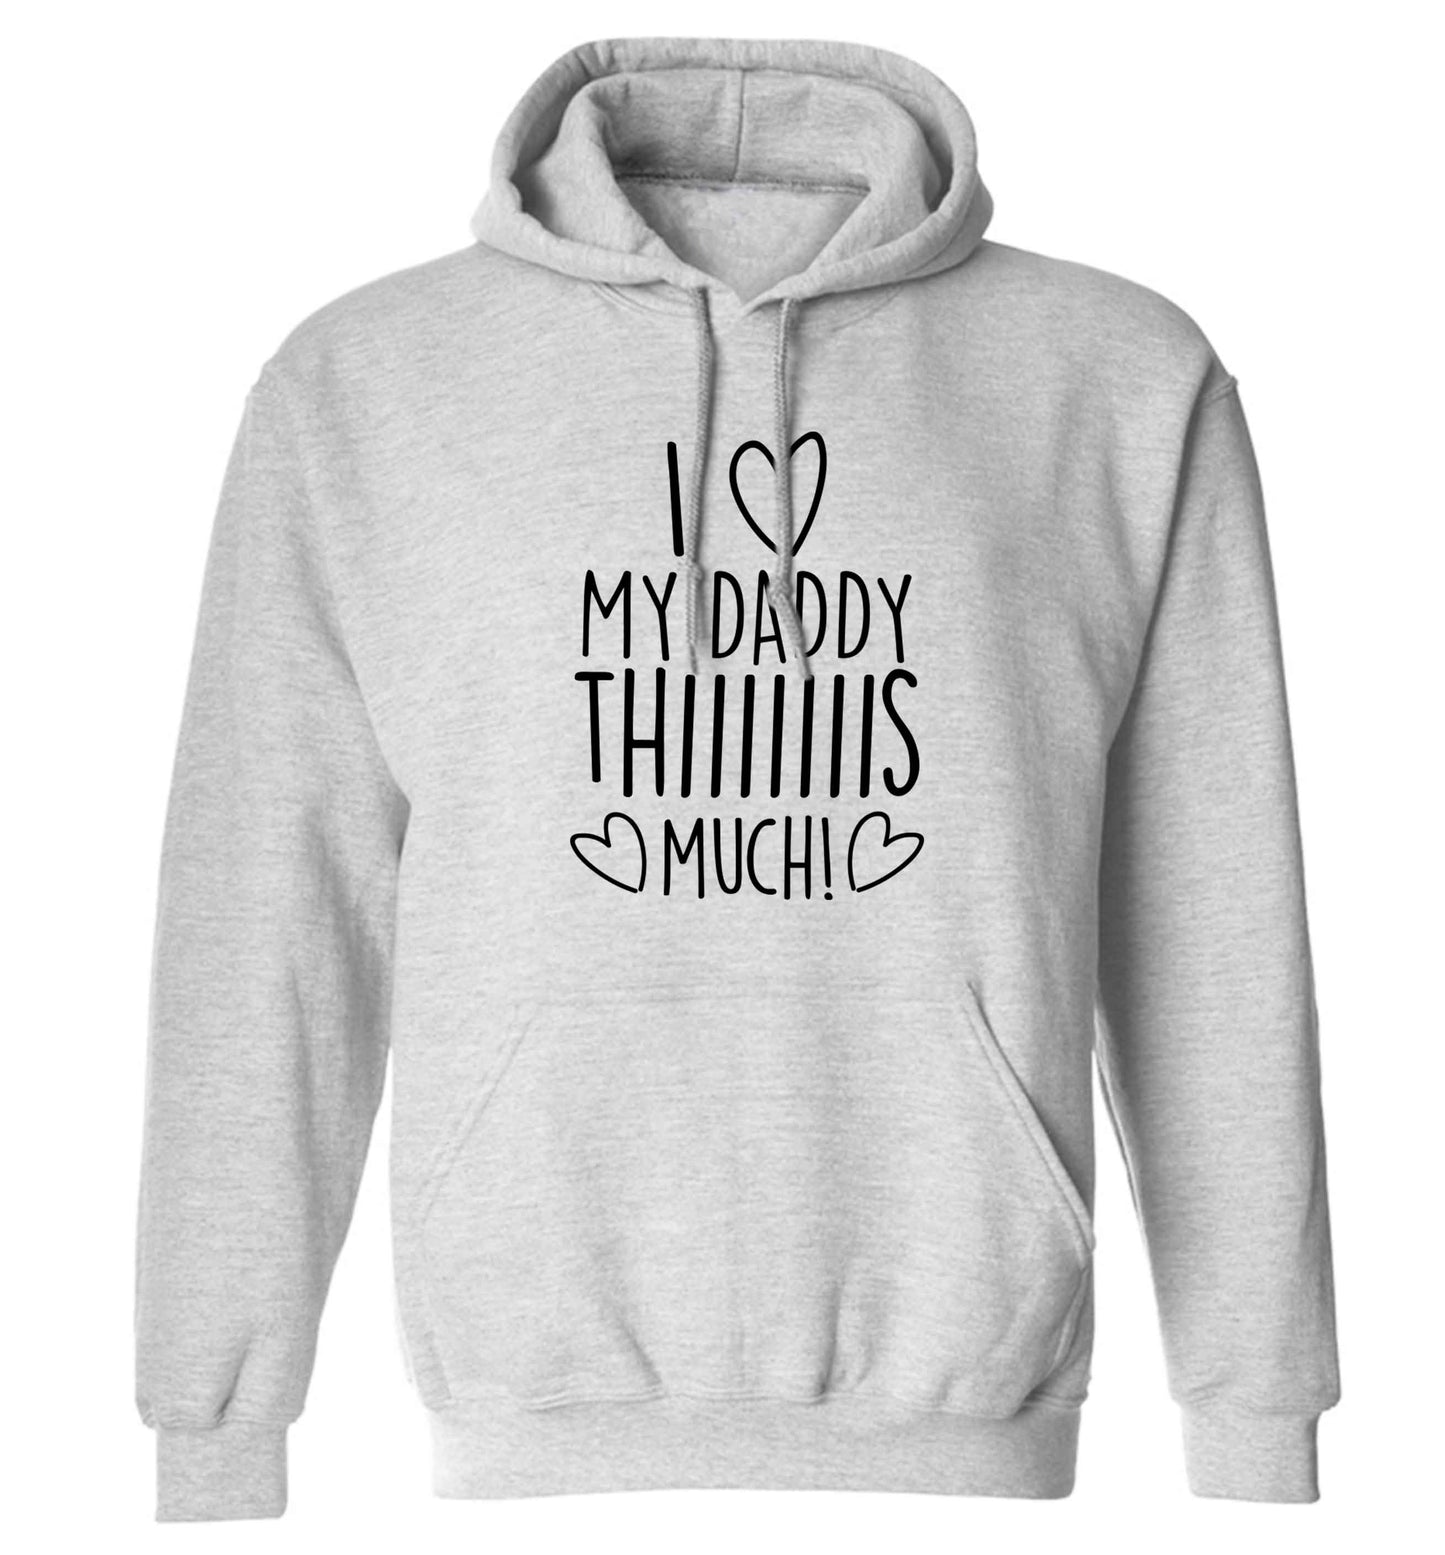 I love my daddy thiiiiis much! adults unisex grey hoodie 2XL